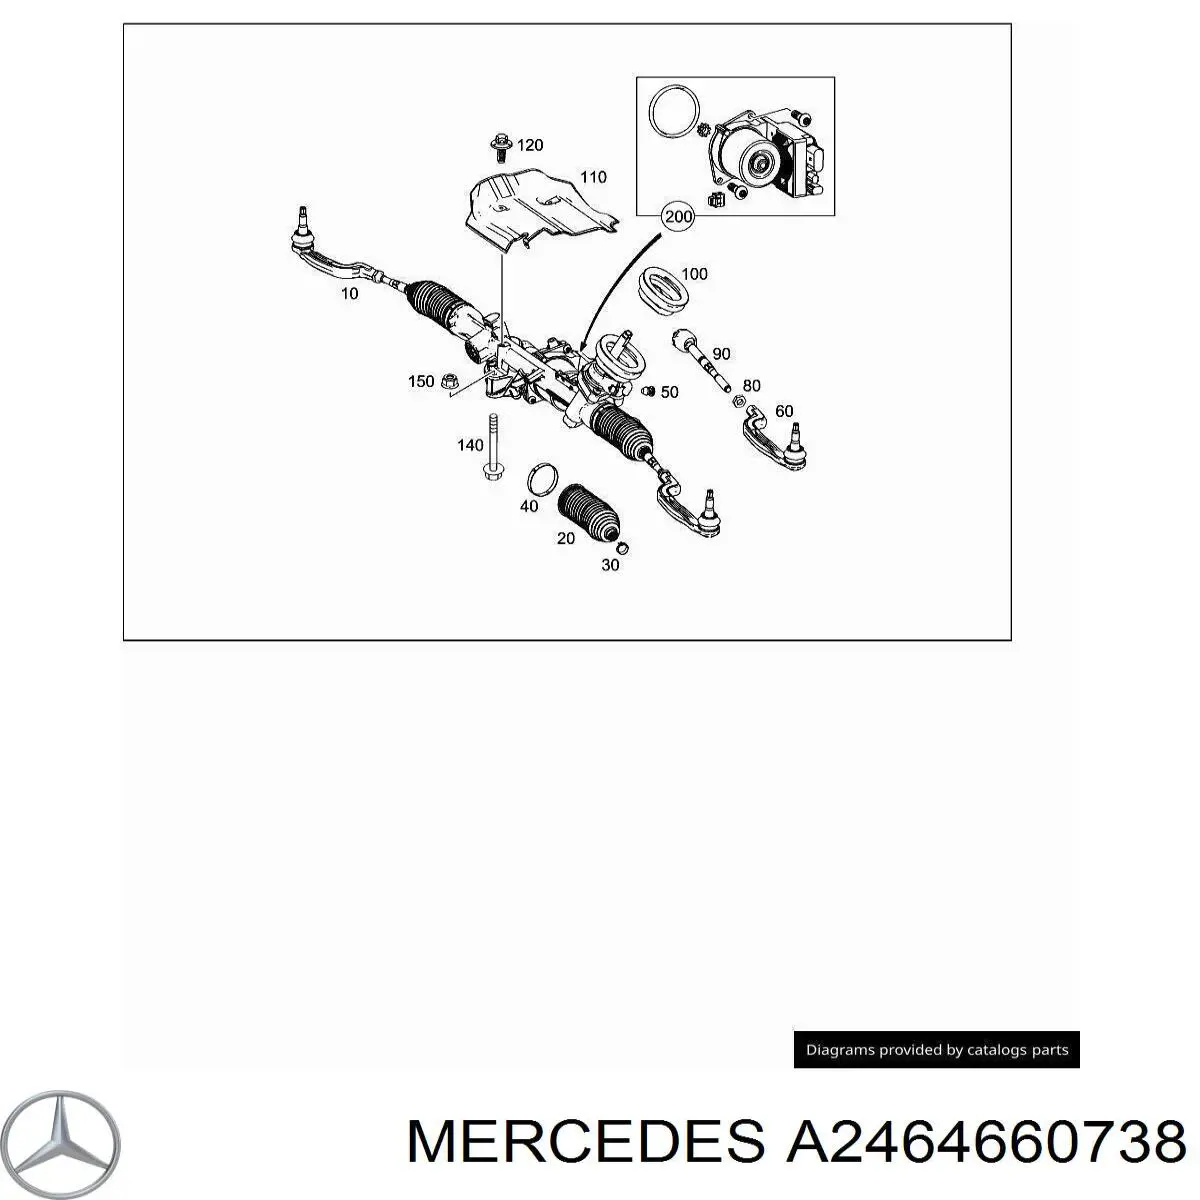 A2464660738 Mercedes